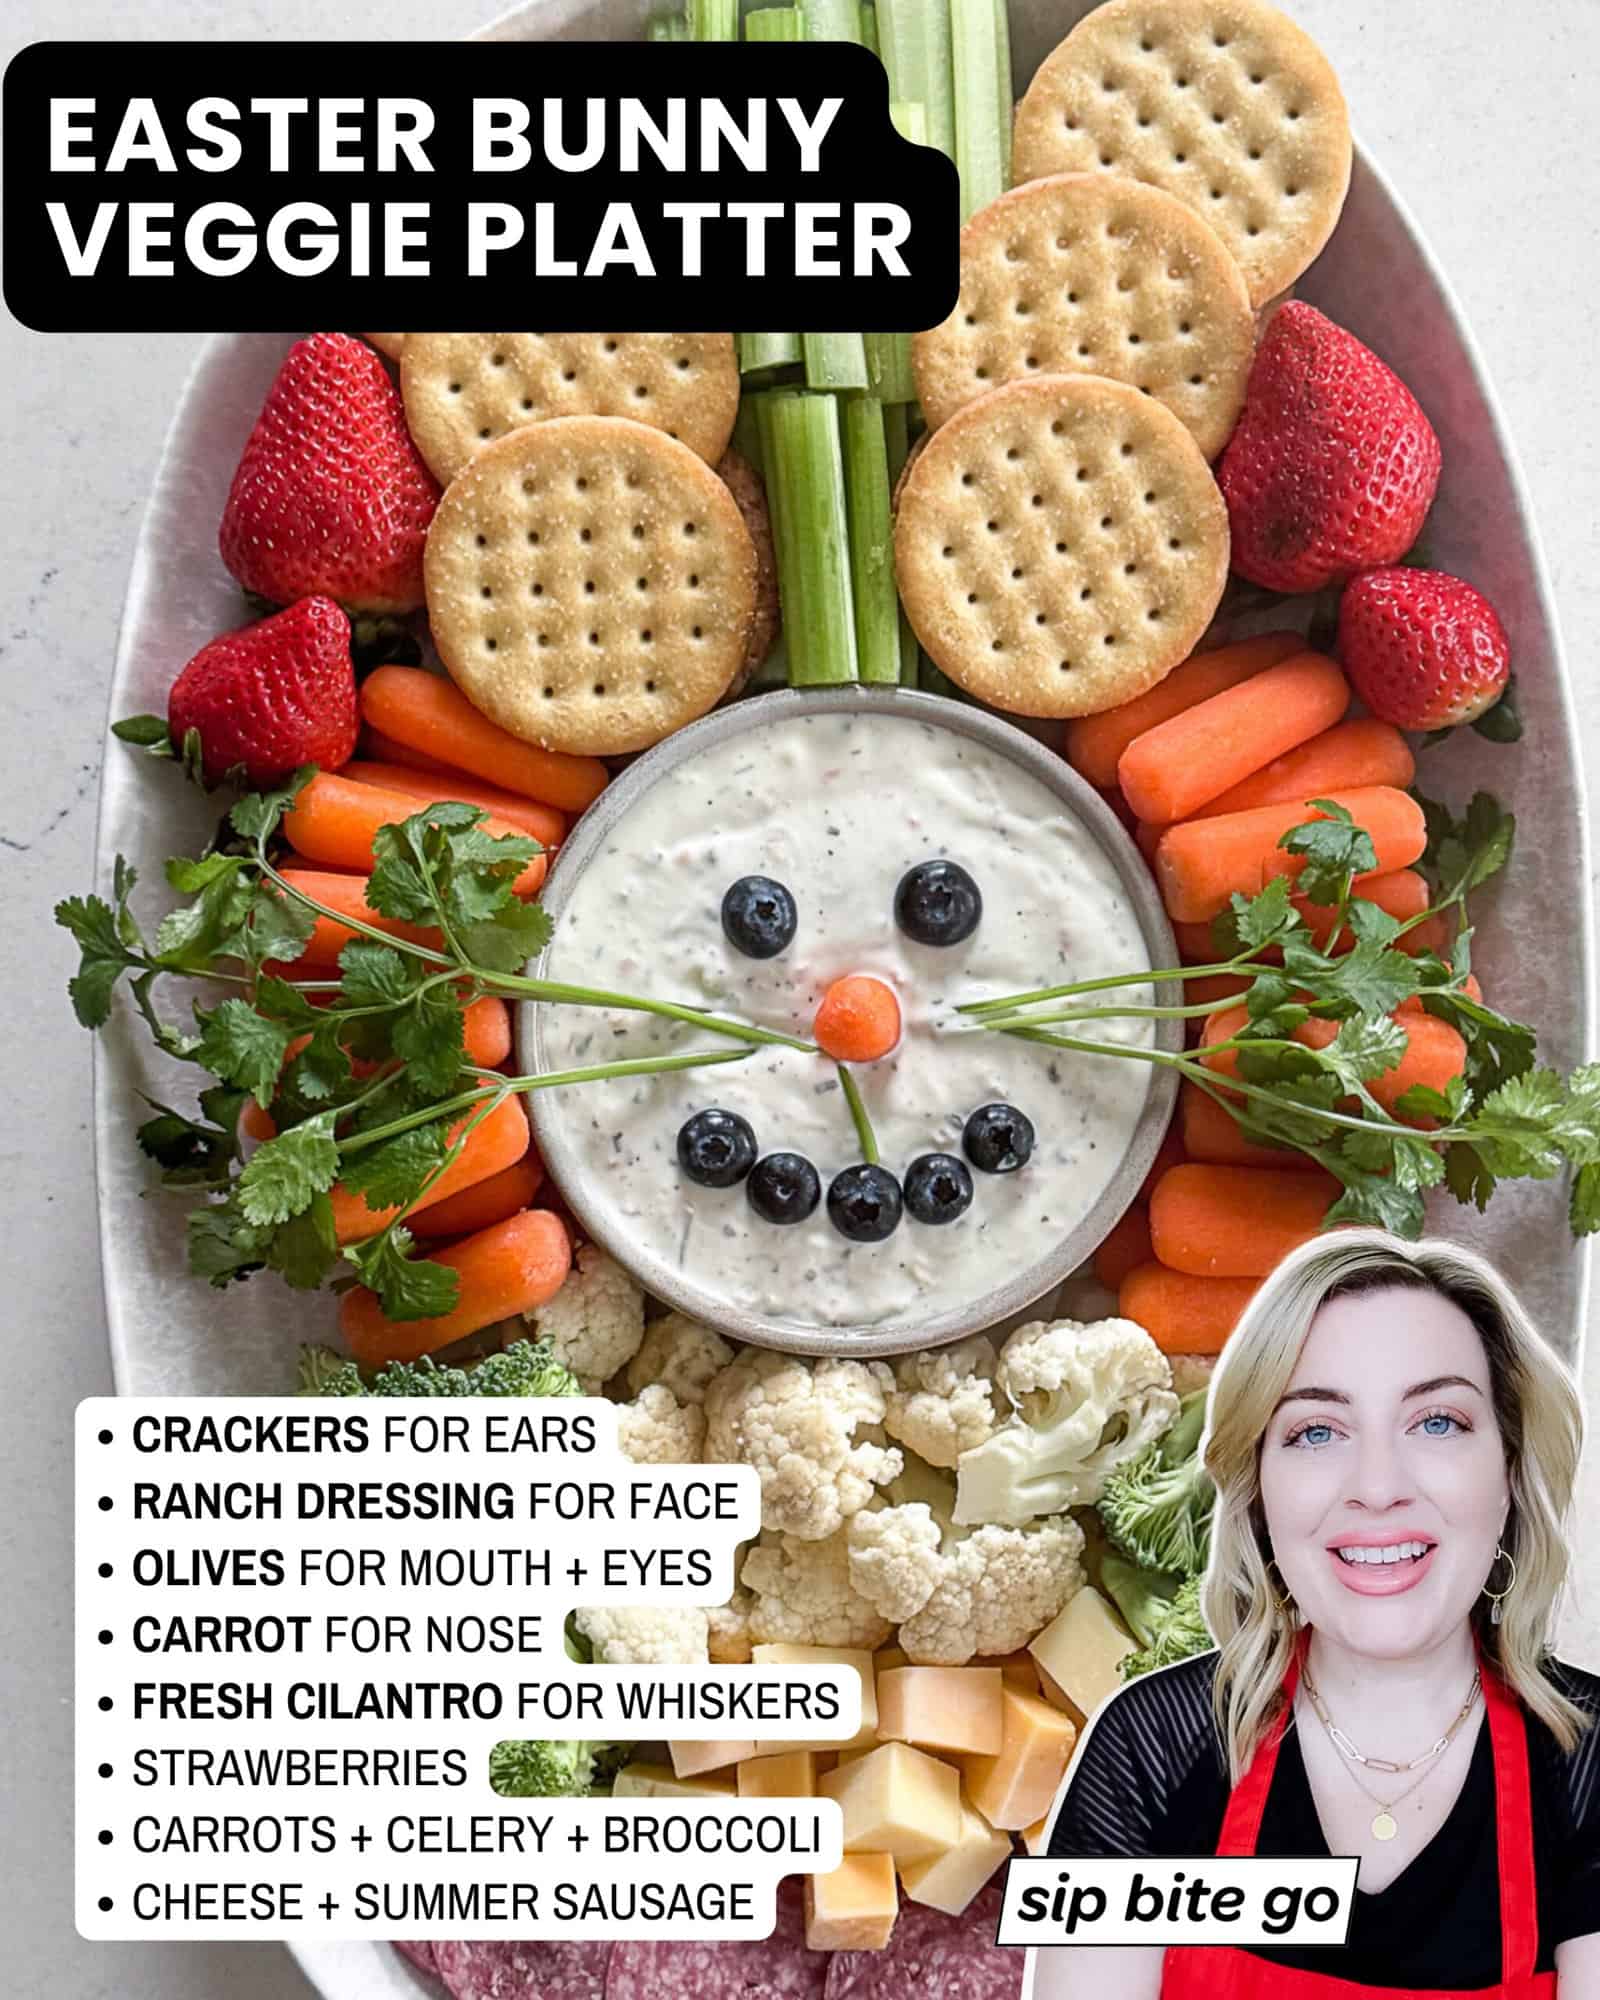 Easter Bunny Veggie Platter Ingredients